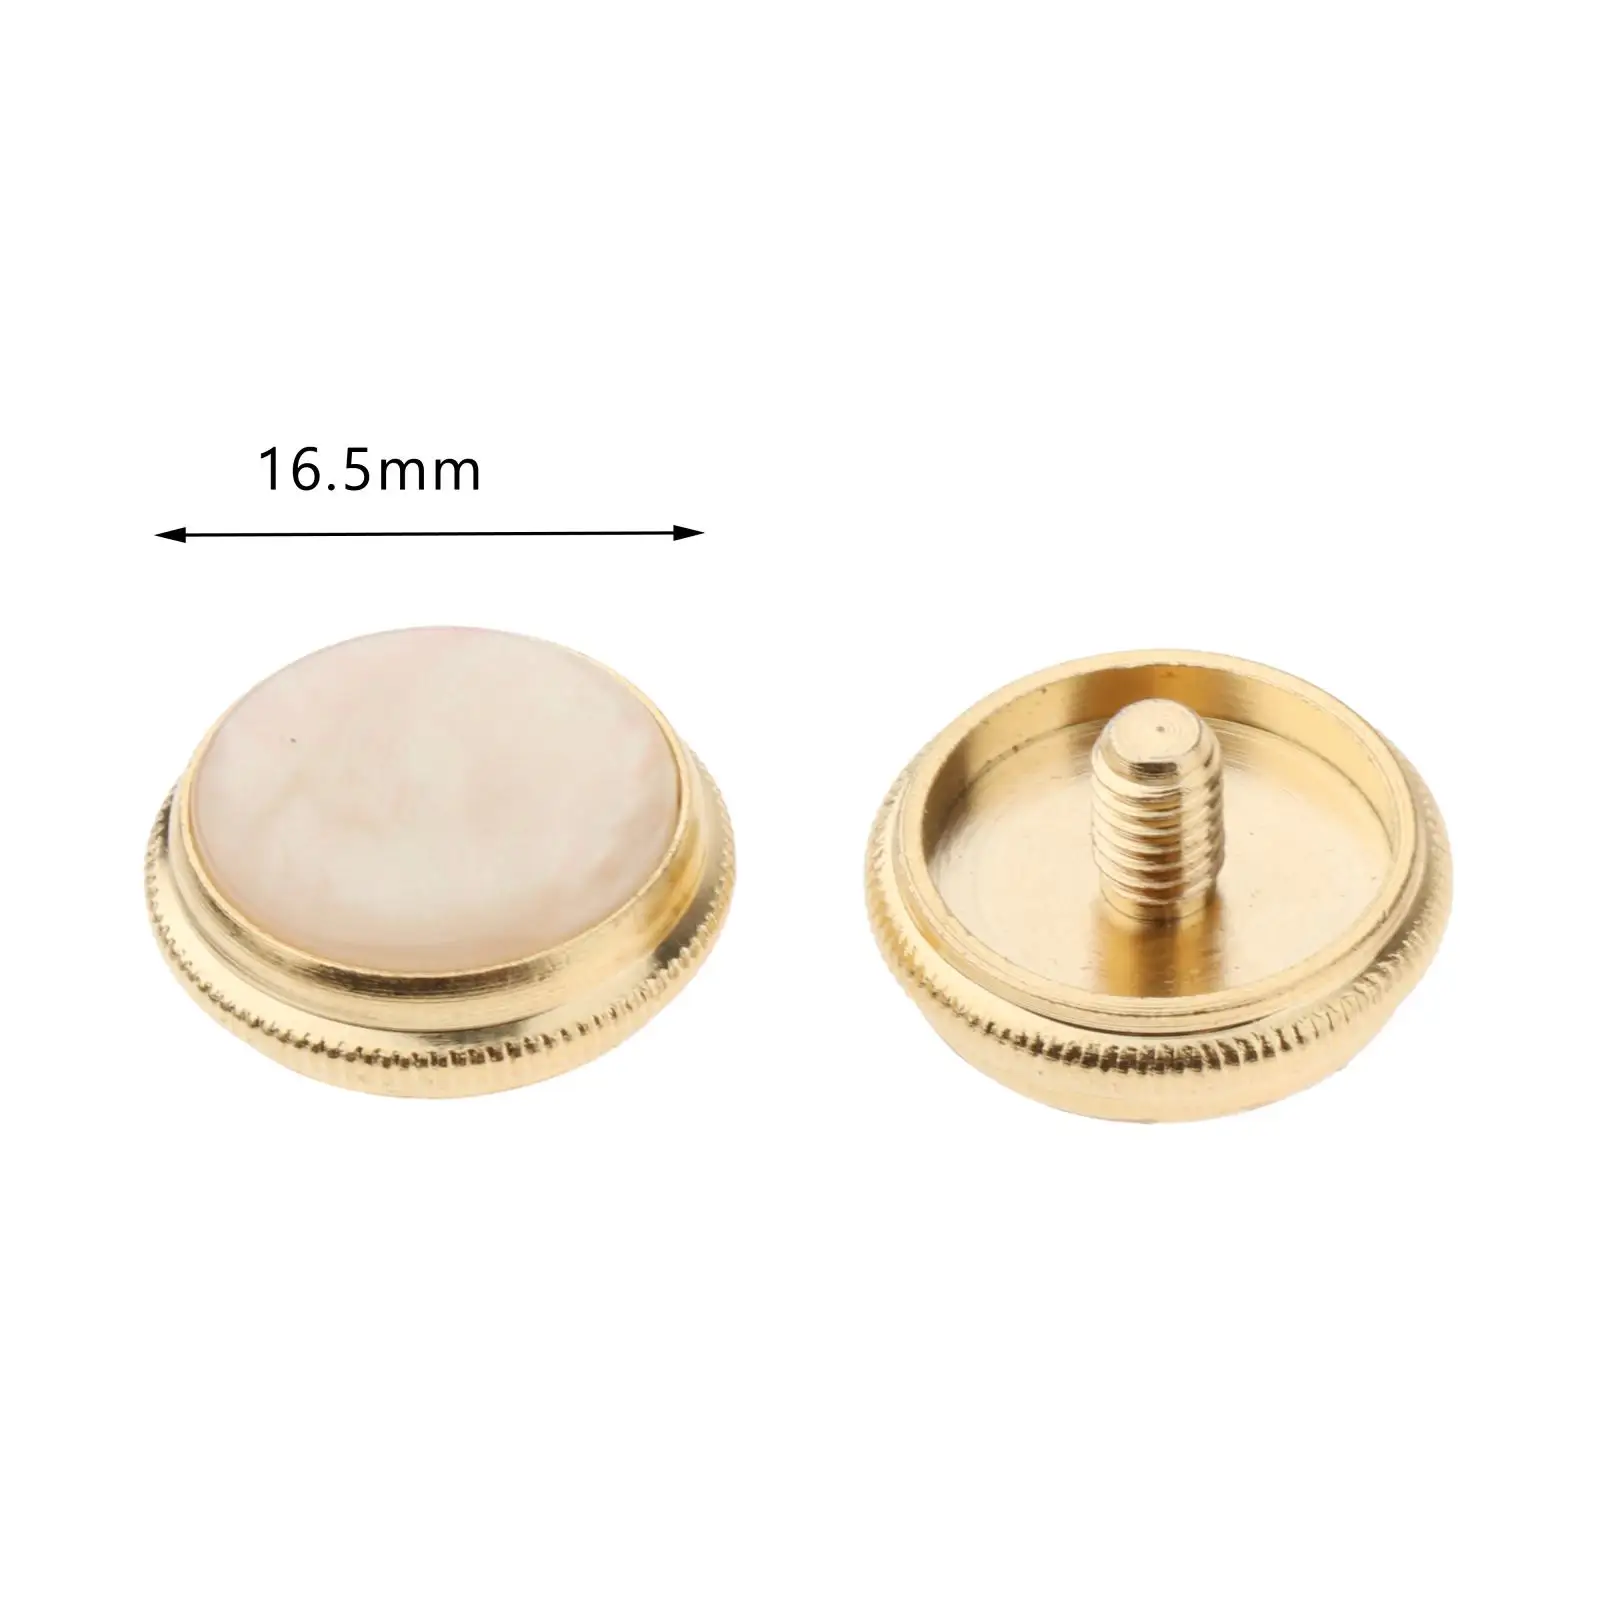 

15 Piece Trumpet Valve Finger Buttons Premium Replacement Repairing Buttons Exquisite Craftsmanhsip Convenient to Use